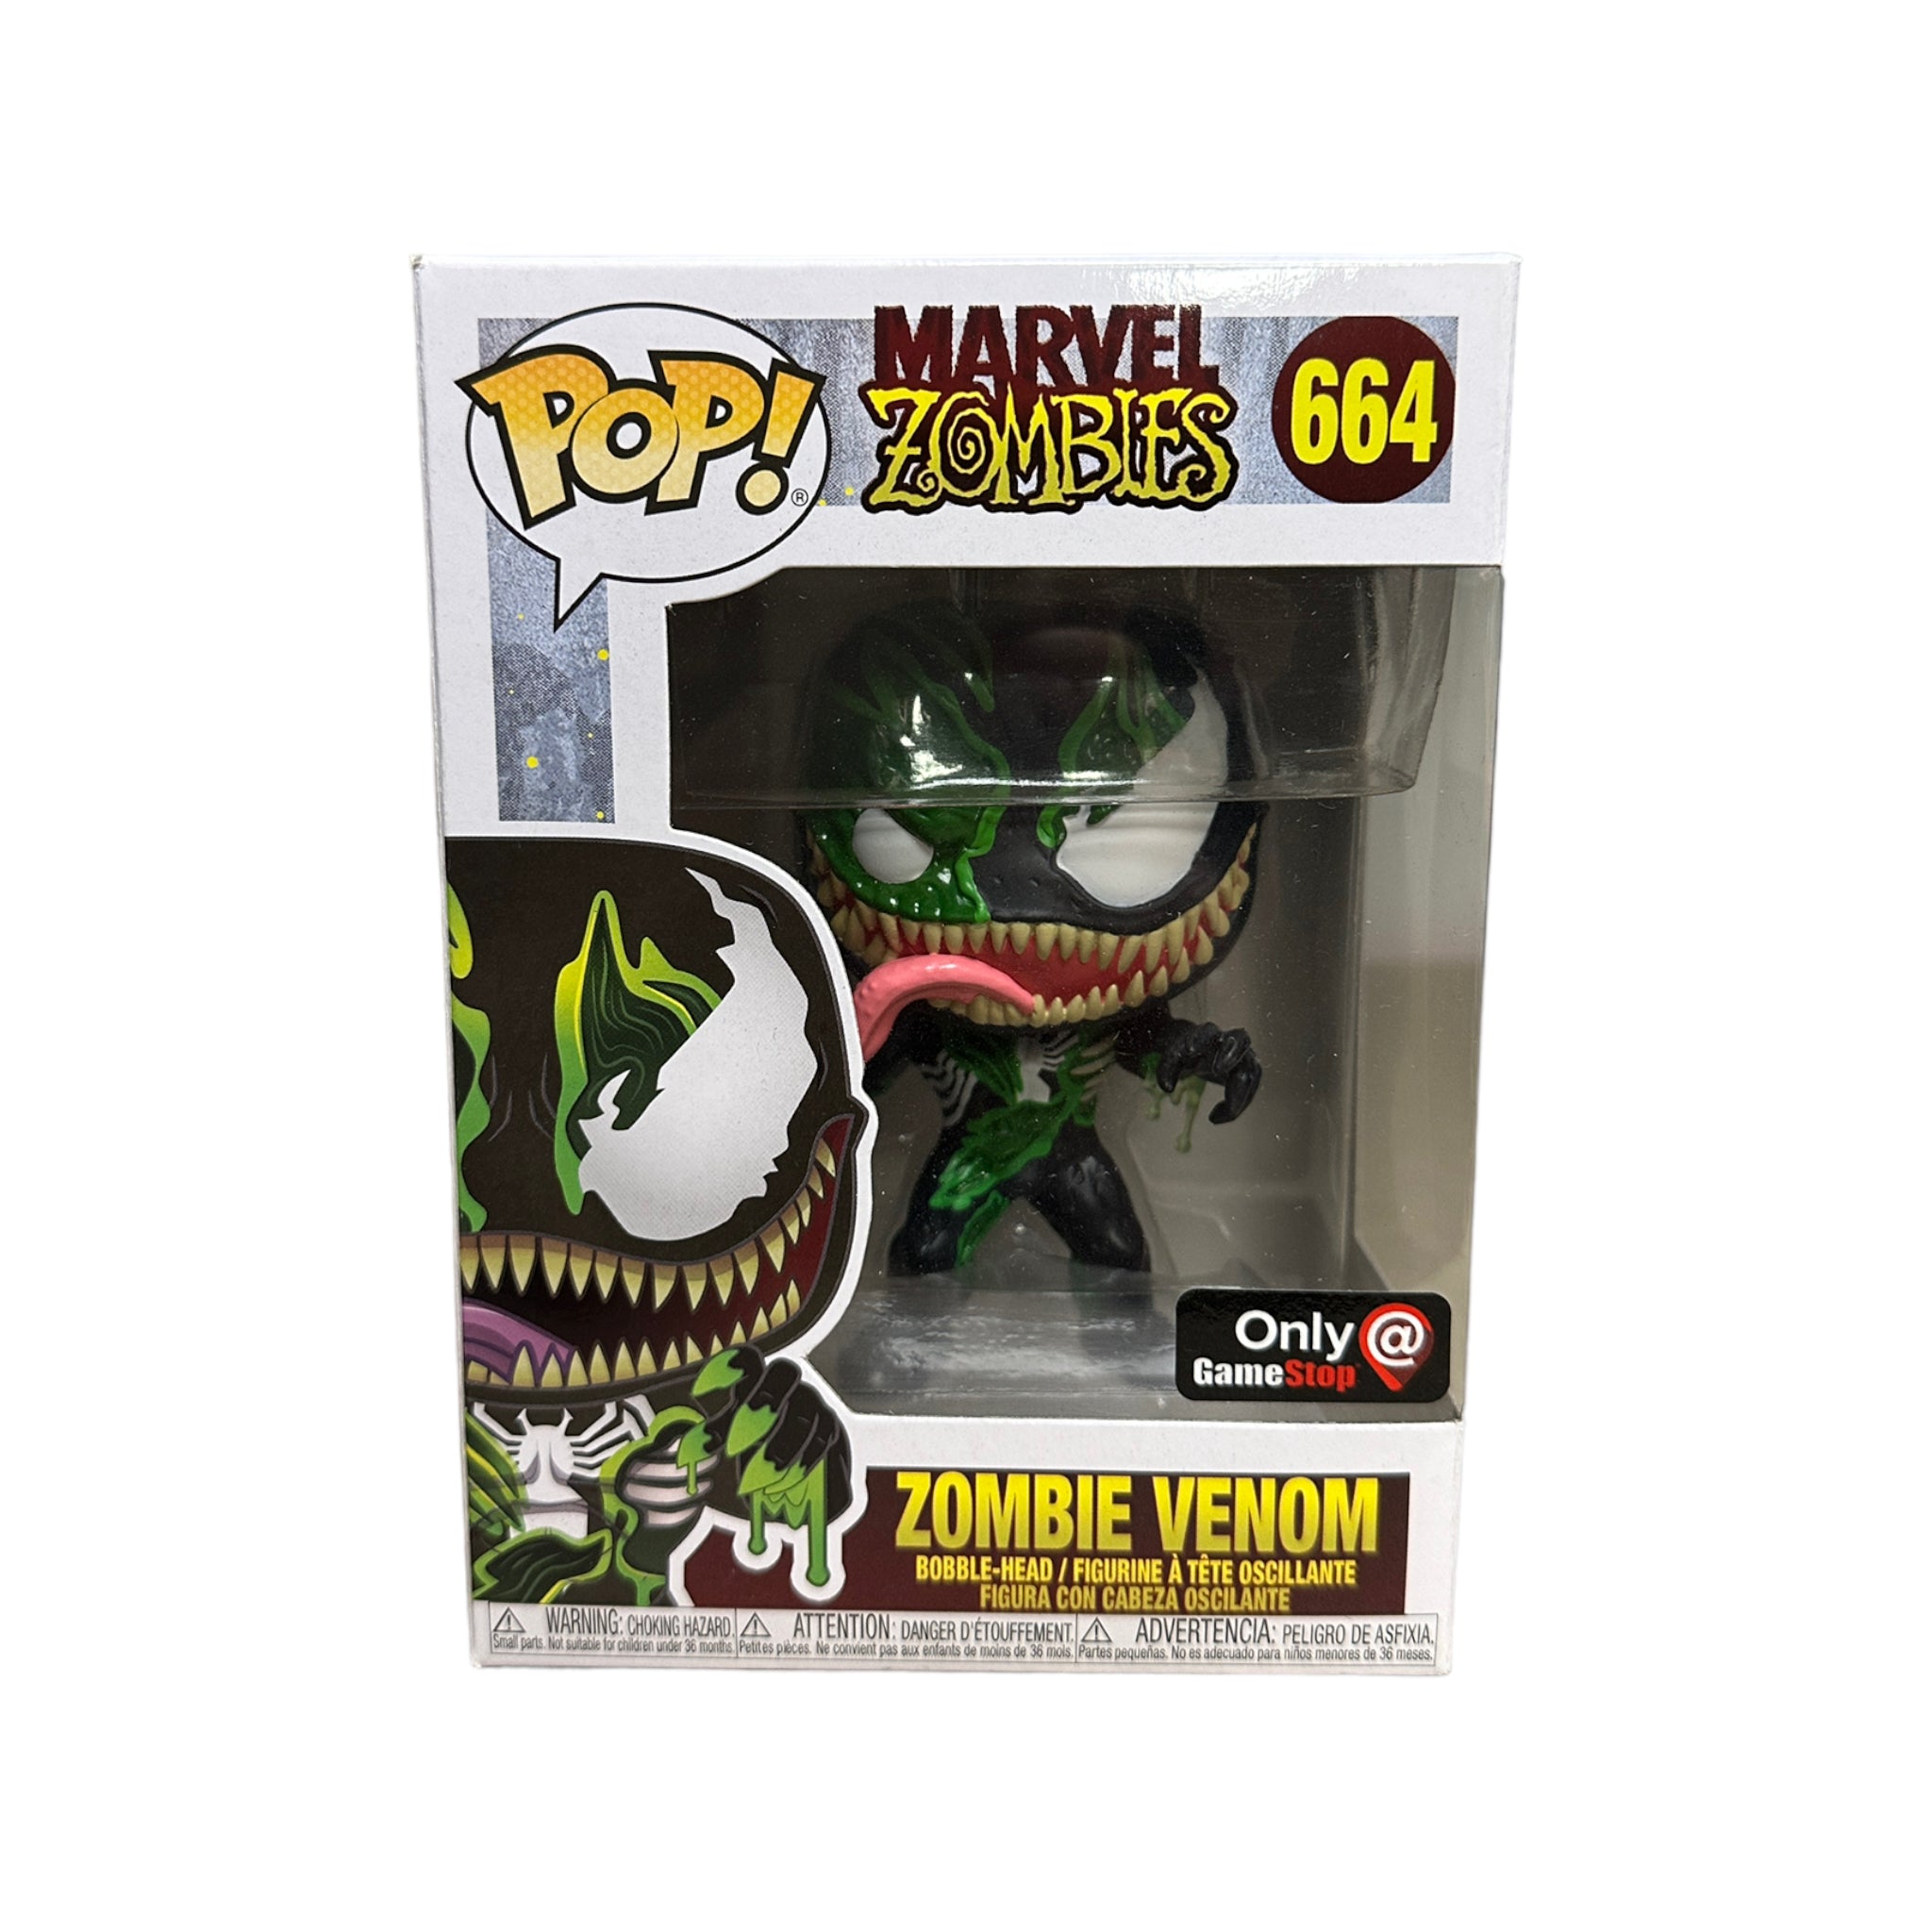 Zombie Venom #664 Funko Pop! - Marvel Zombies - GameStop Exclusive - Condition 8.75/10